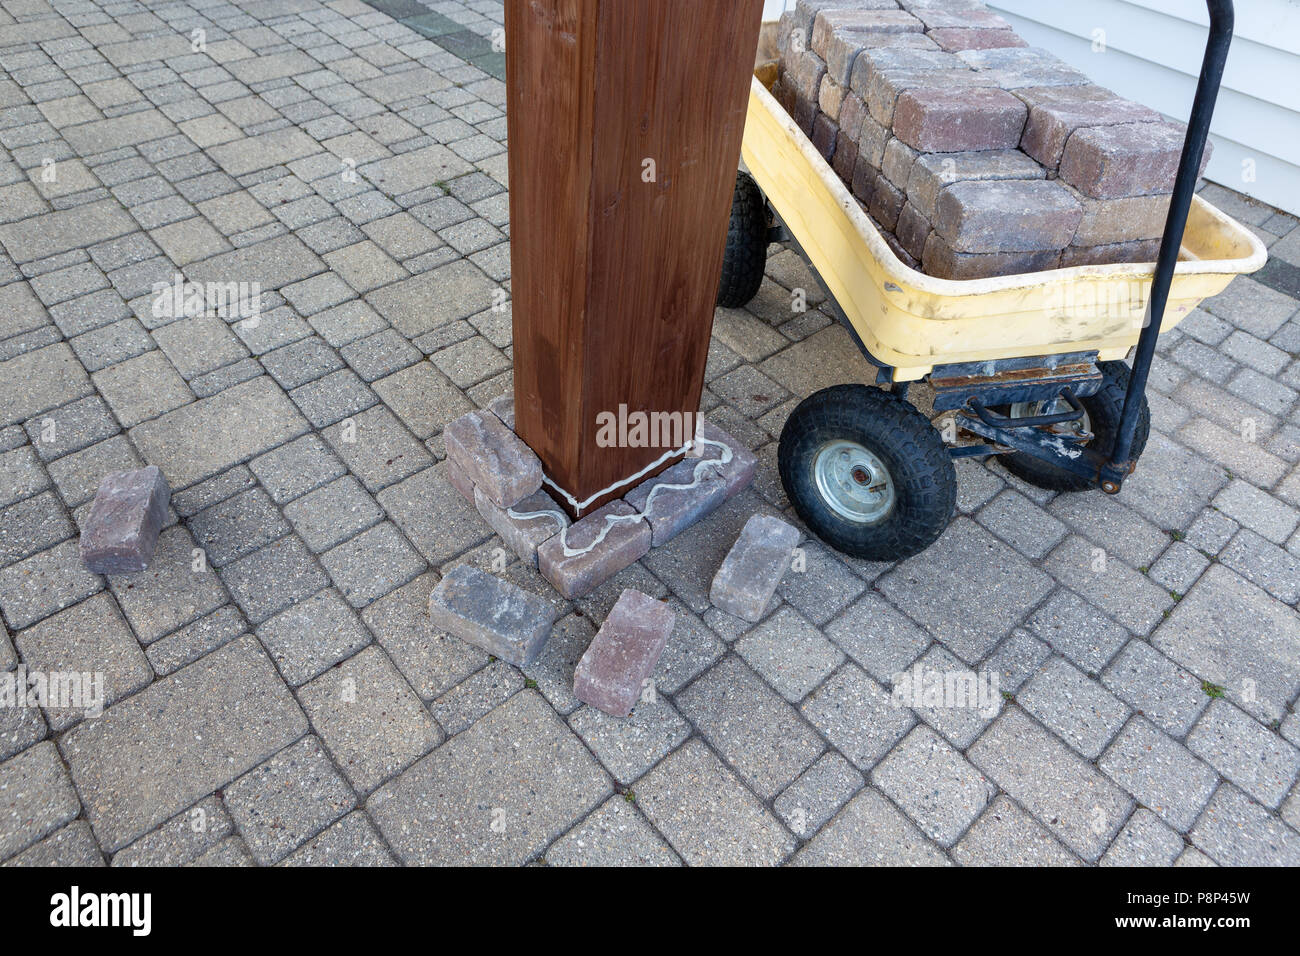 Diy improvements to an exterior patio gluing paving bricks loaded in a wheelbarrow around the wooden leg of a newly installed gazebo or pergola Stock Photo